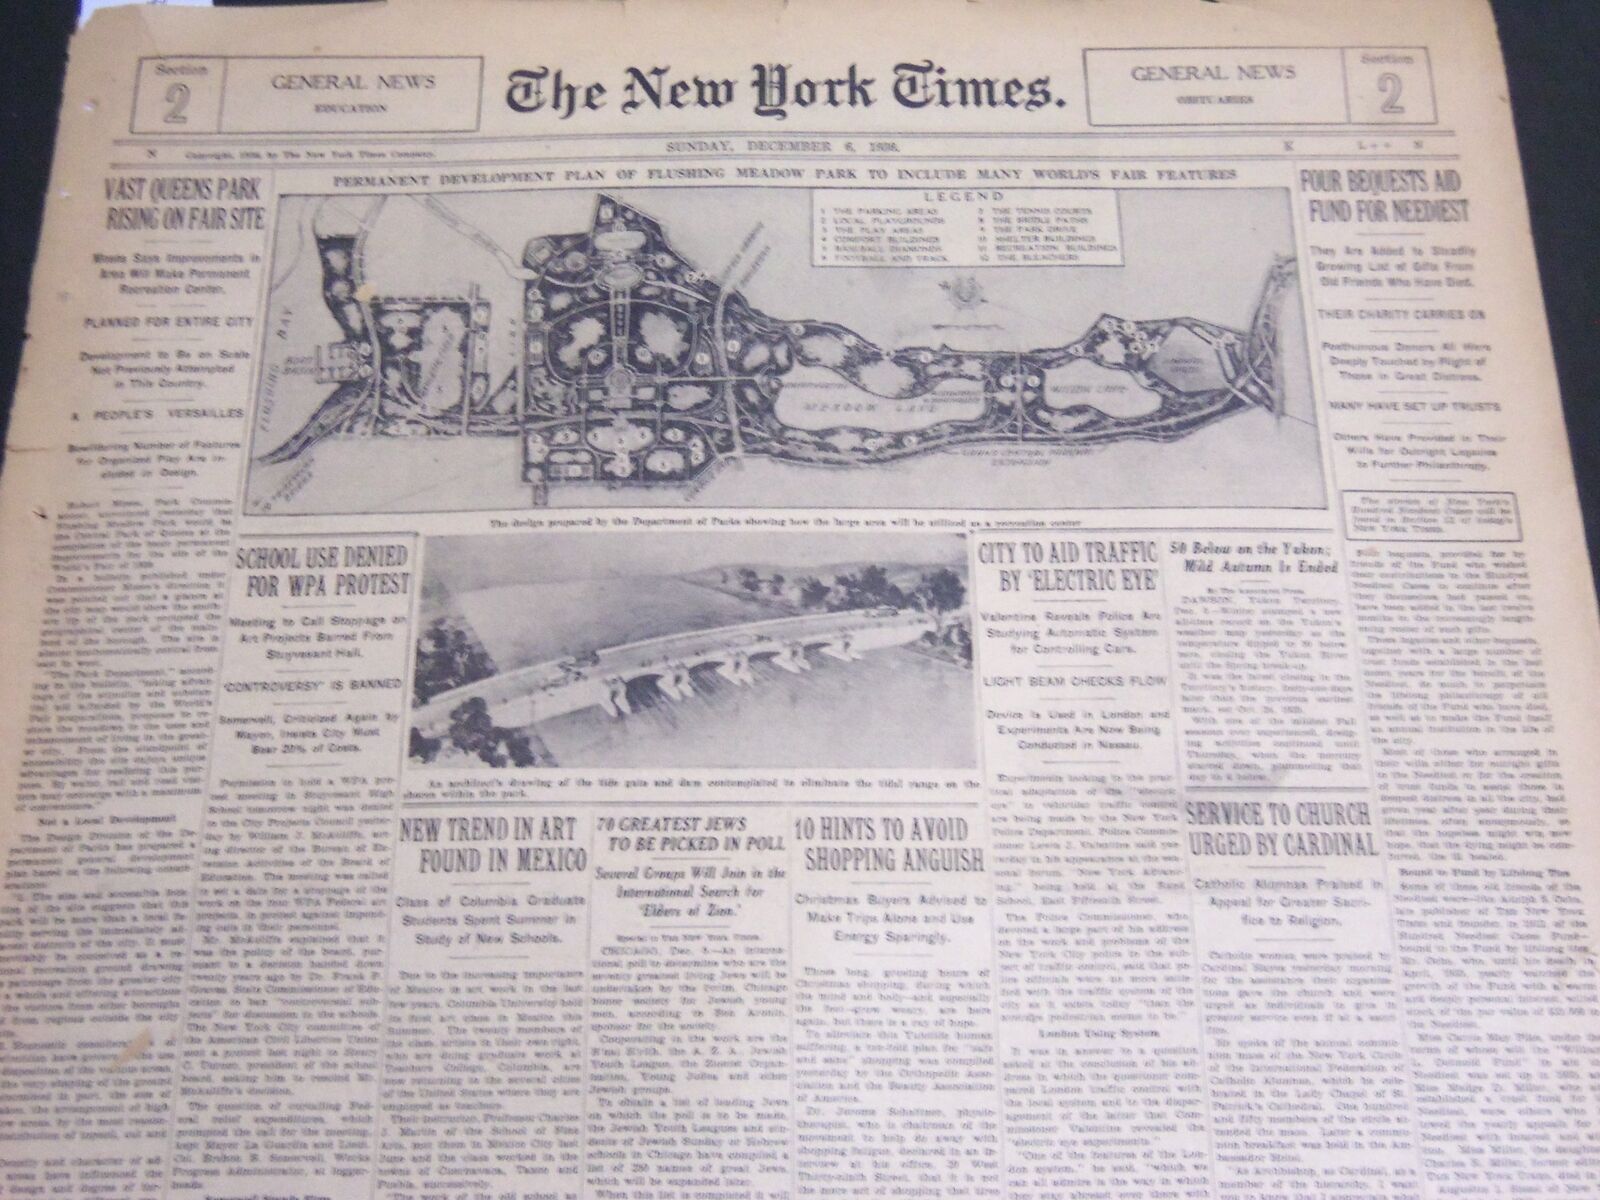 1936 DECEMBER 6 NEW YORK TIMES GENERAL NEWS - VAST QUEENS PARK RISING - NT 7003